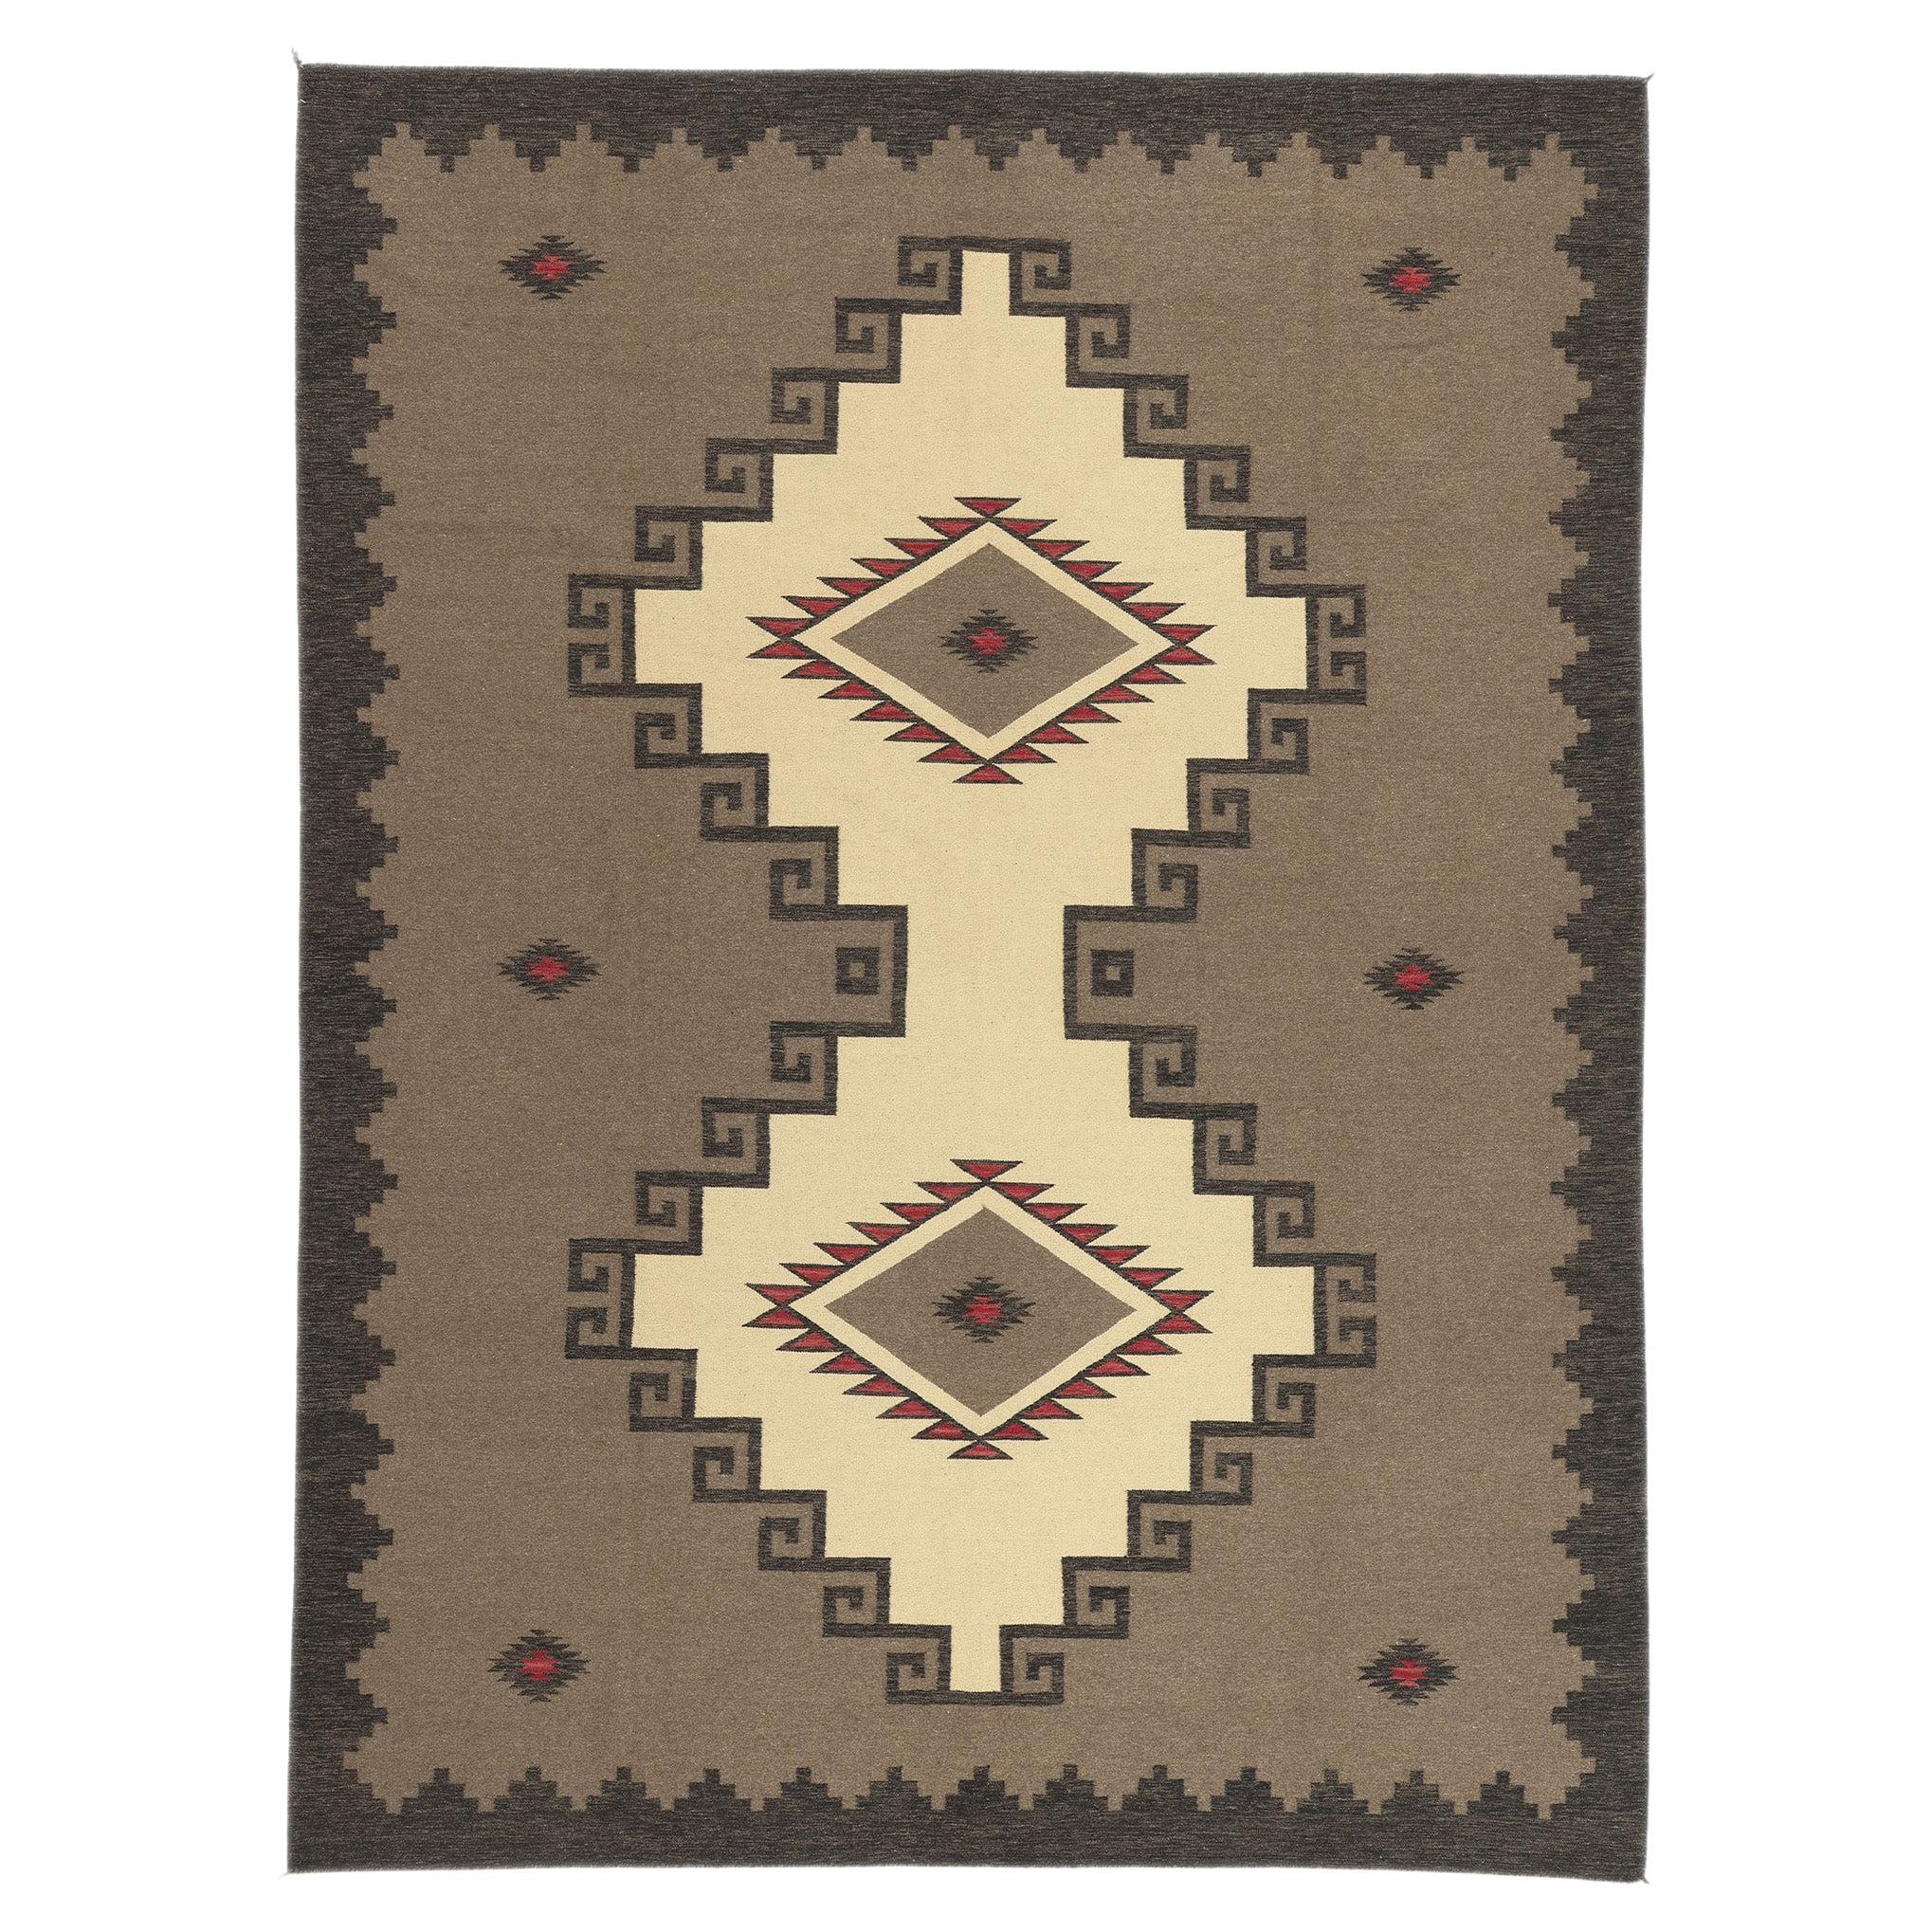 Contemporary Santa Fe Southwest Modern Ganado Navajo-Style Rug